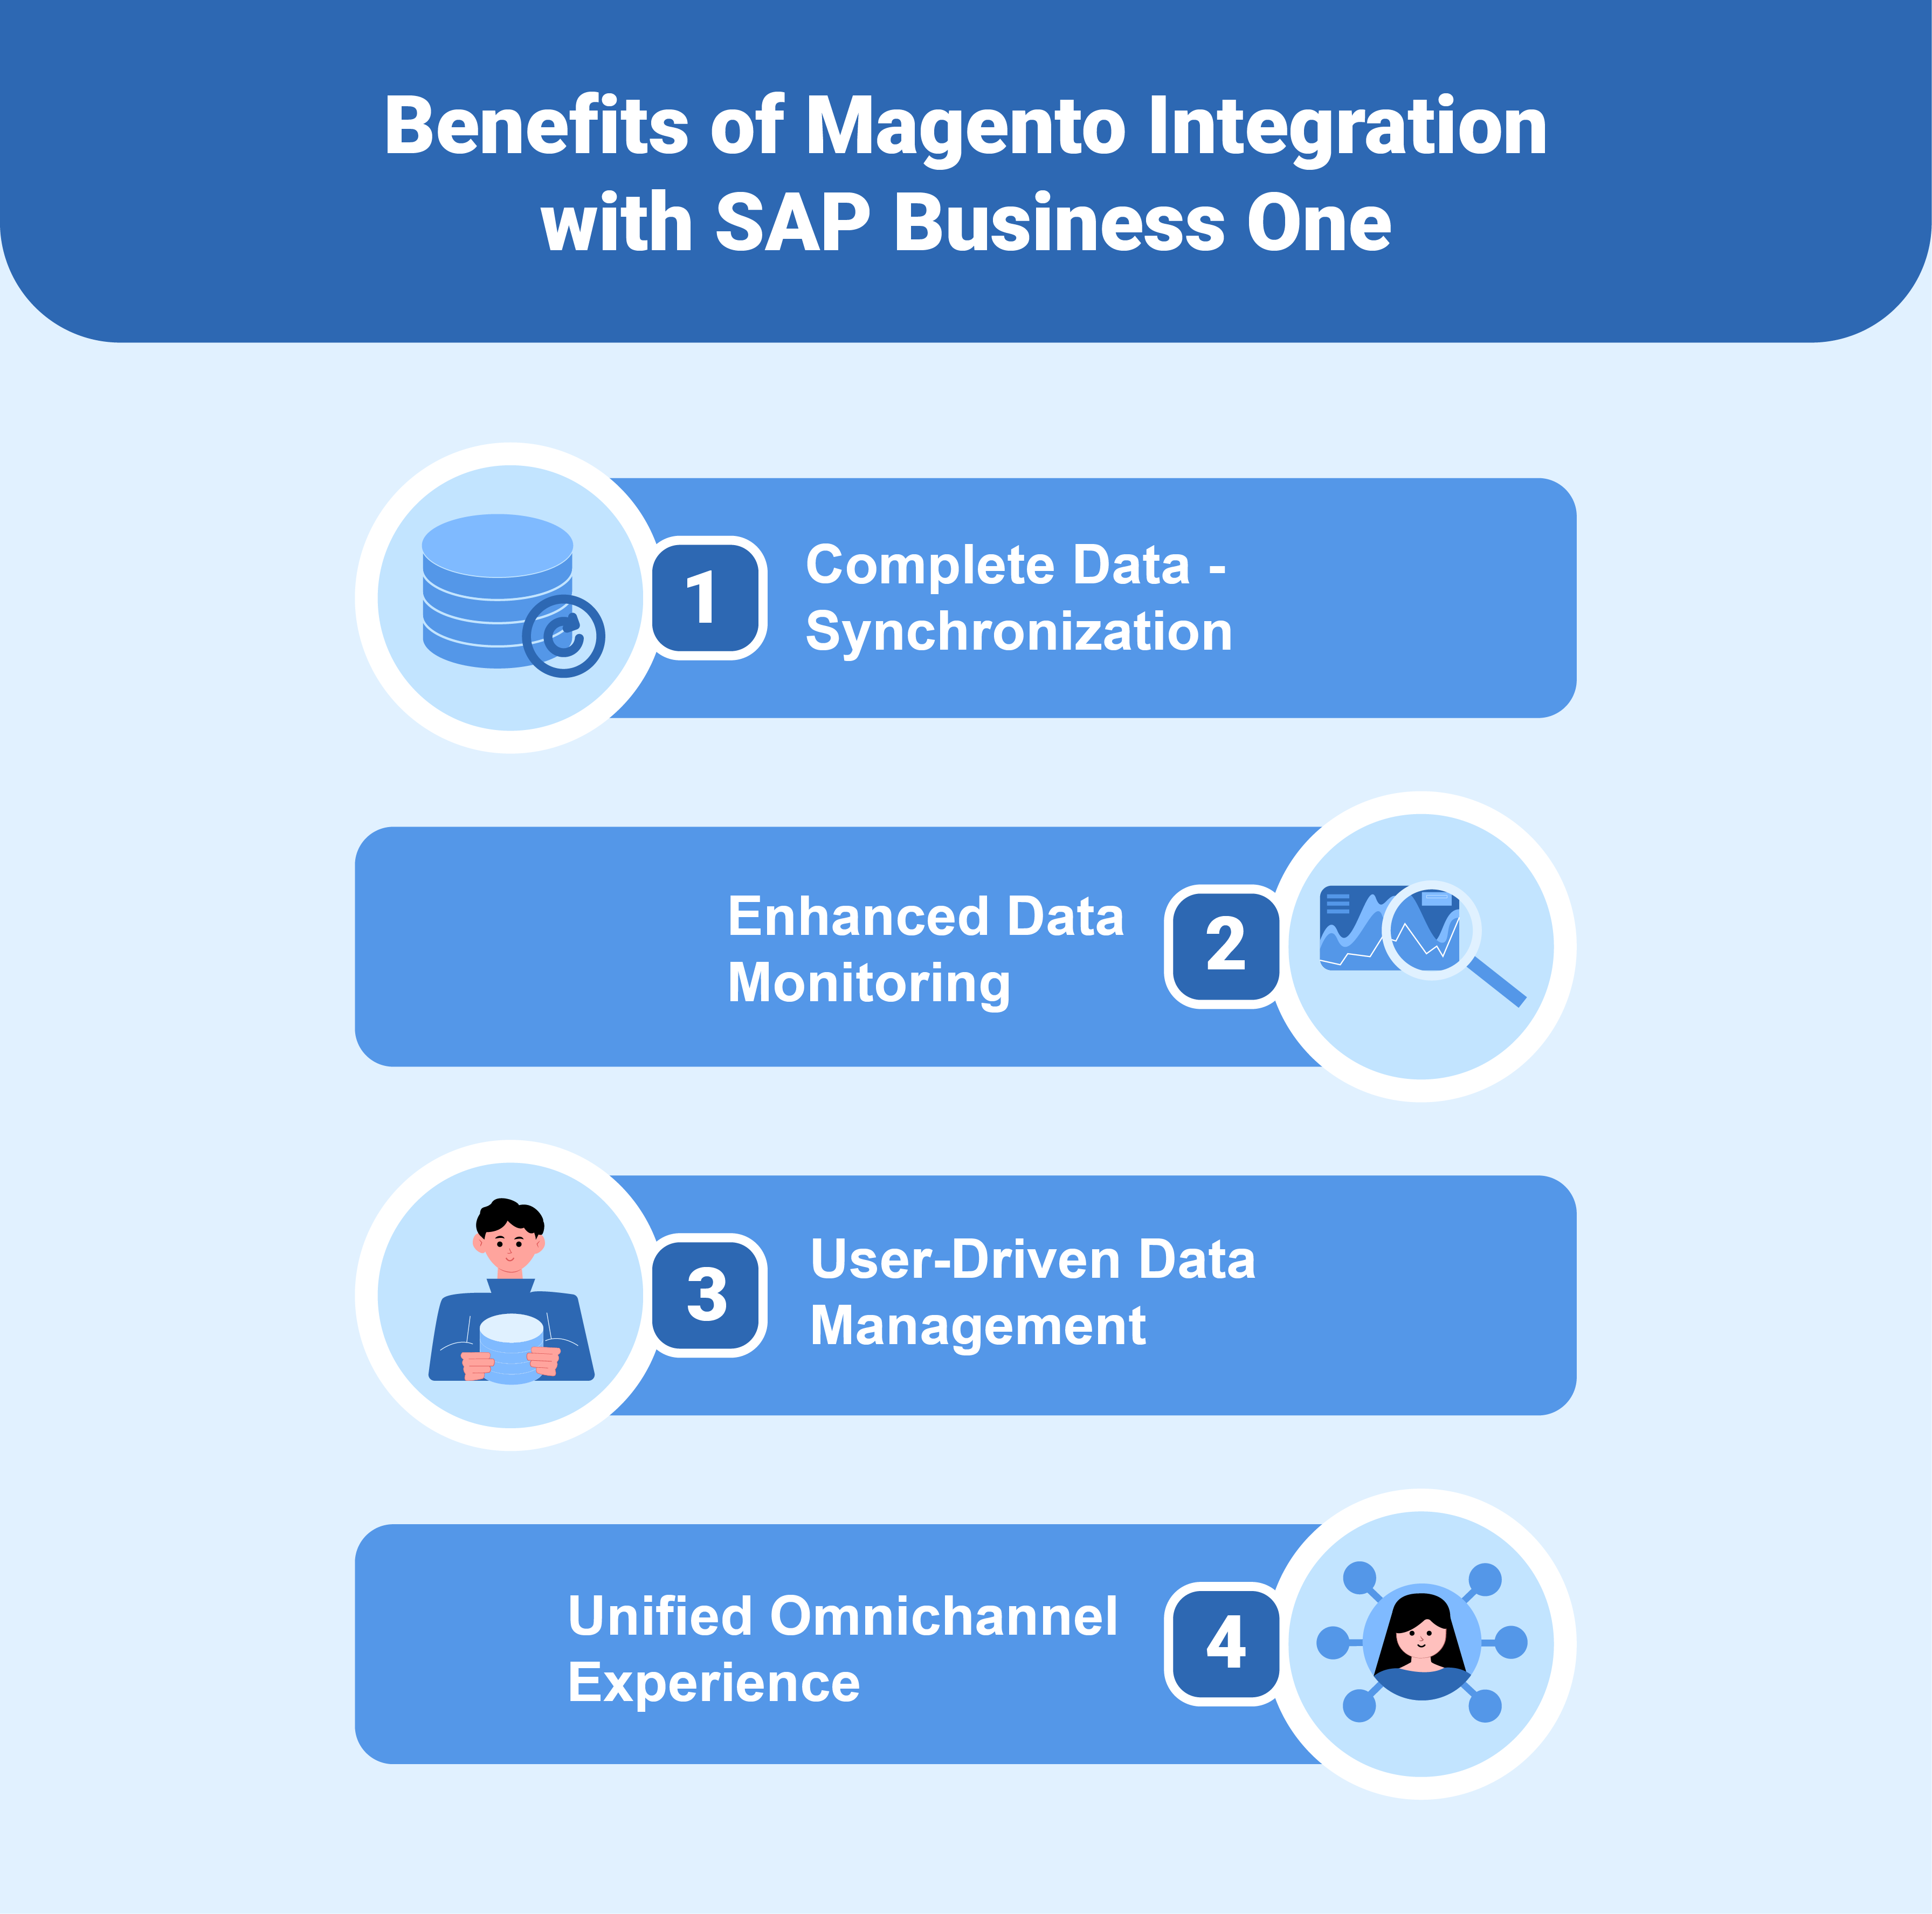 Benefits of SAP Business One Magento Integration